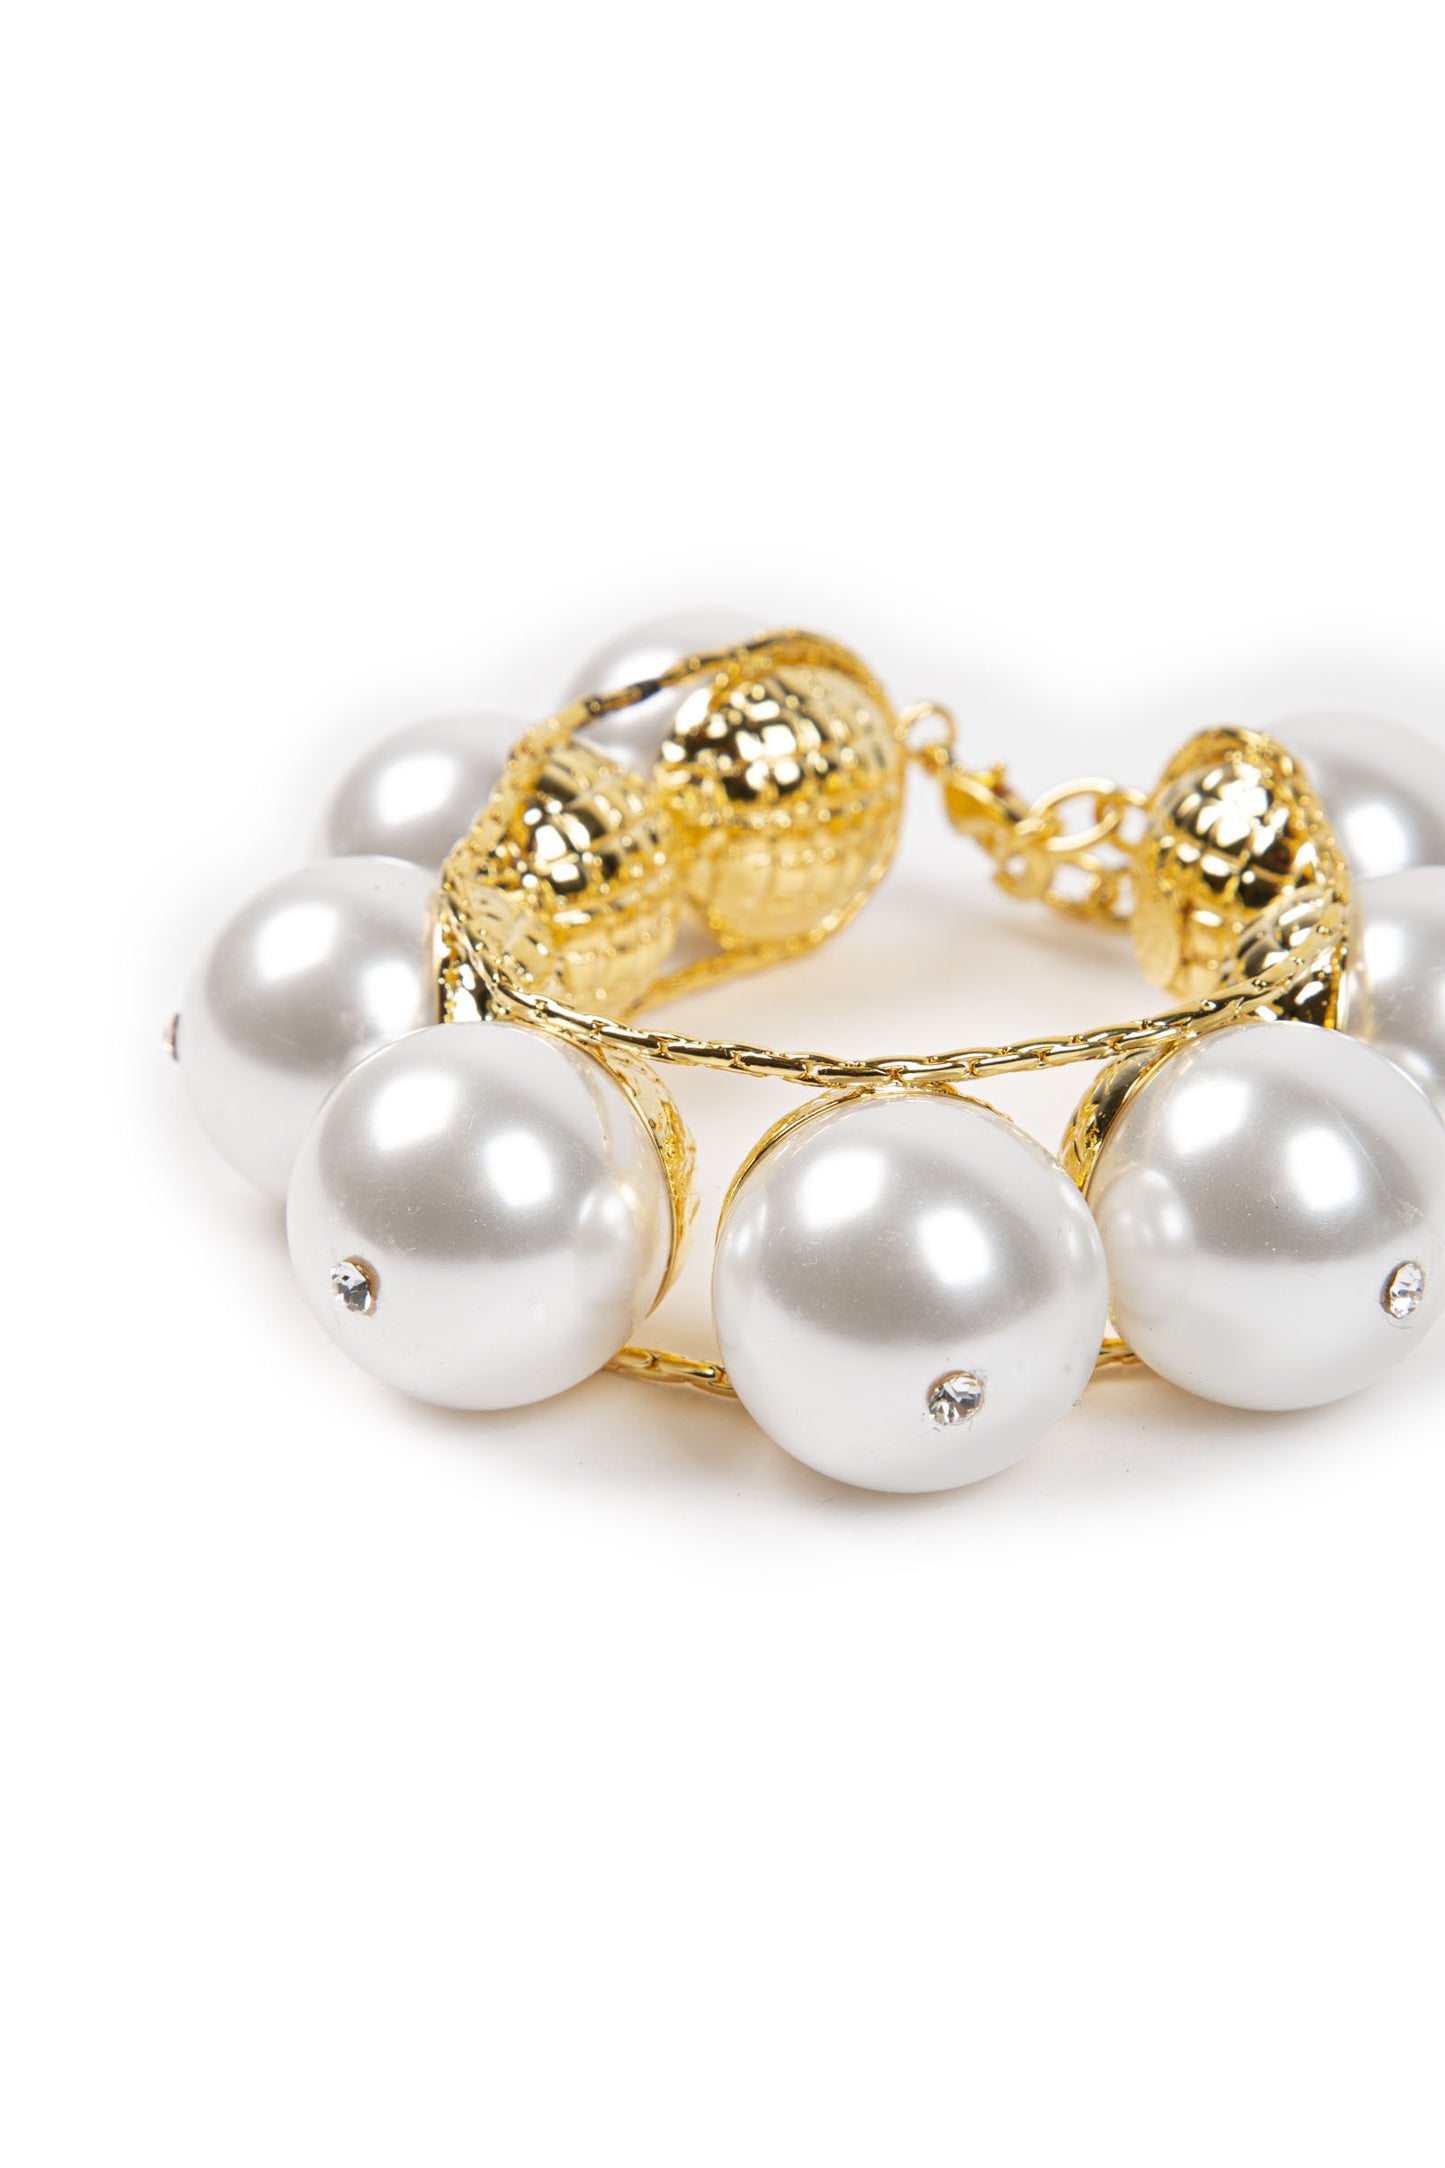 DANIELA DALLAVALLE Armband mit Perlen Gold+Silber